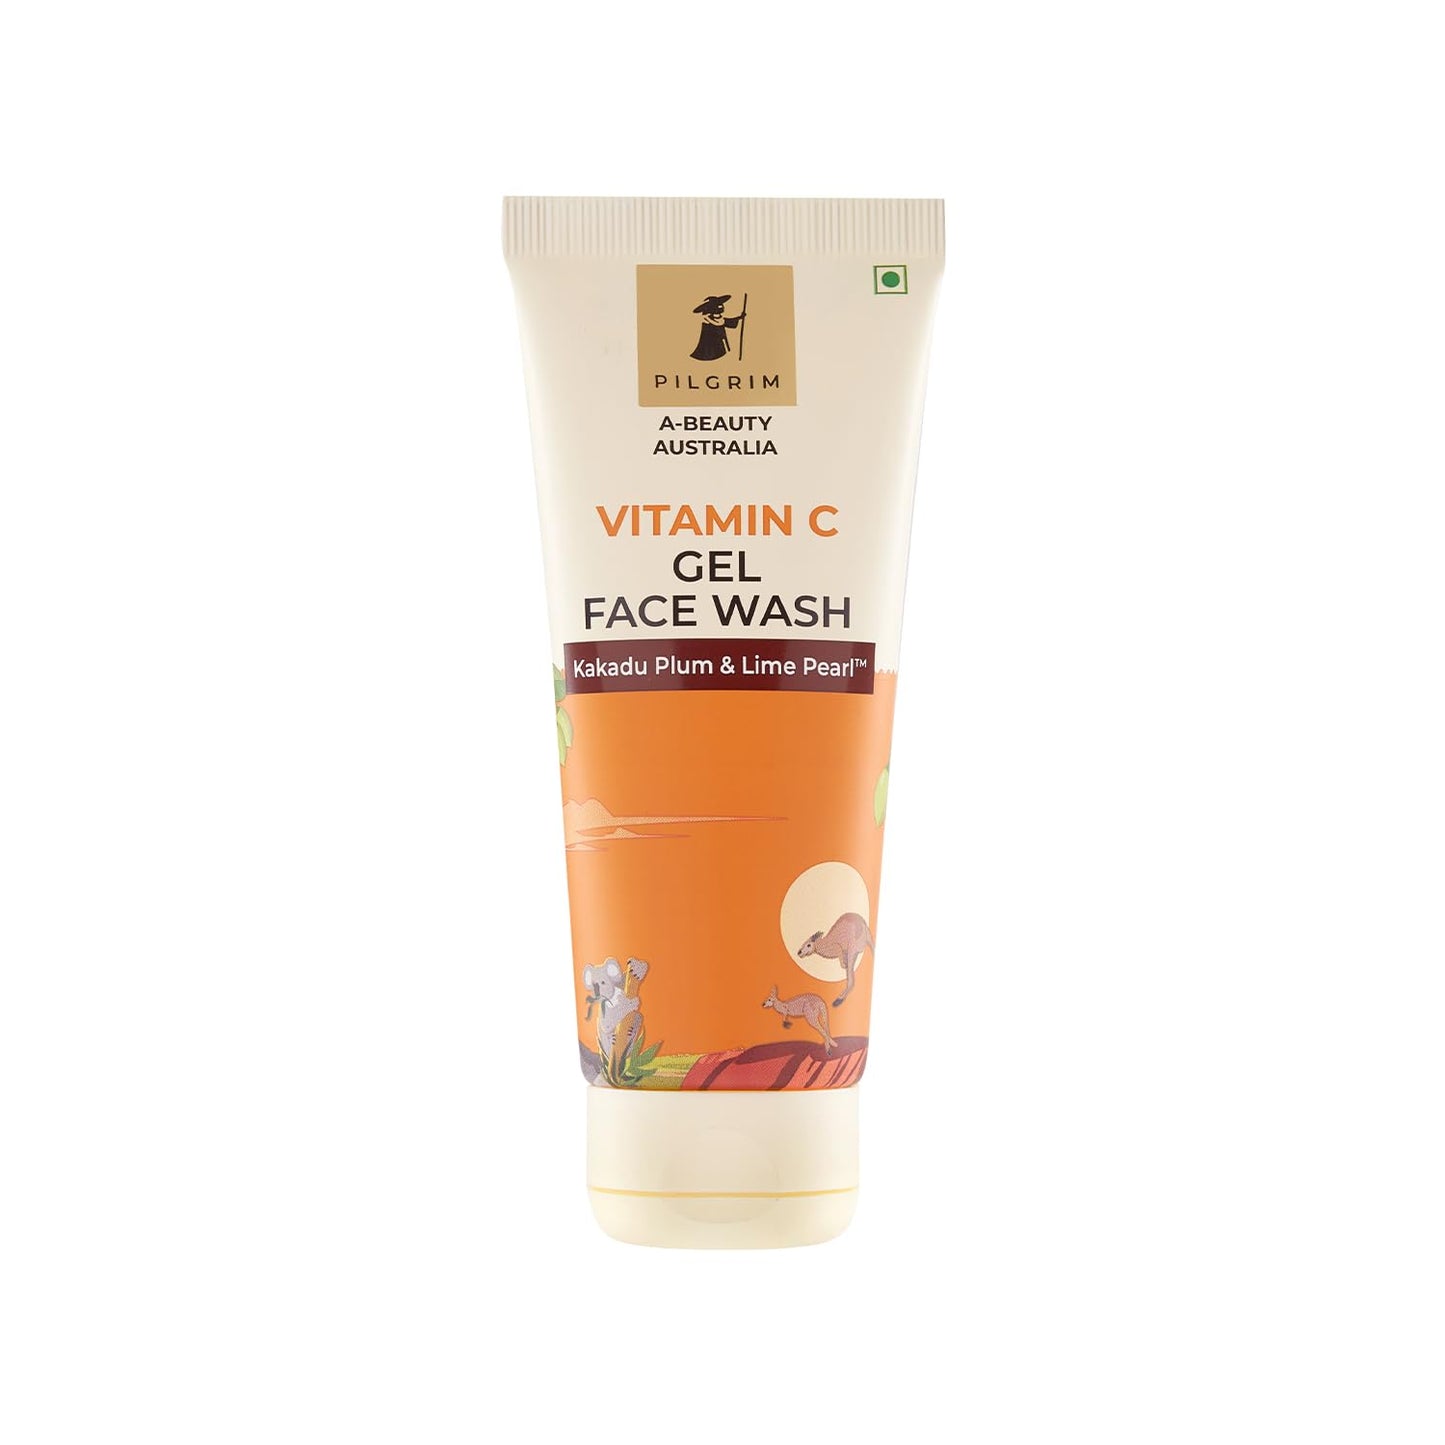 Pilgrim Australian Vitamin C Gel Face Wash for for dry/ radiant/ glowing skin with Kakadu Plum & Lime Pearl™ | Women & Men | 100 ml face Wash from Pilgrim